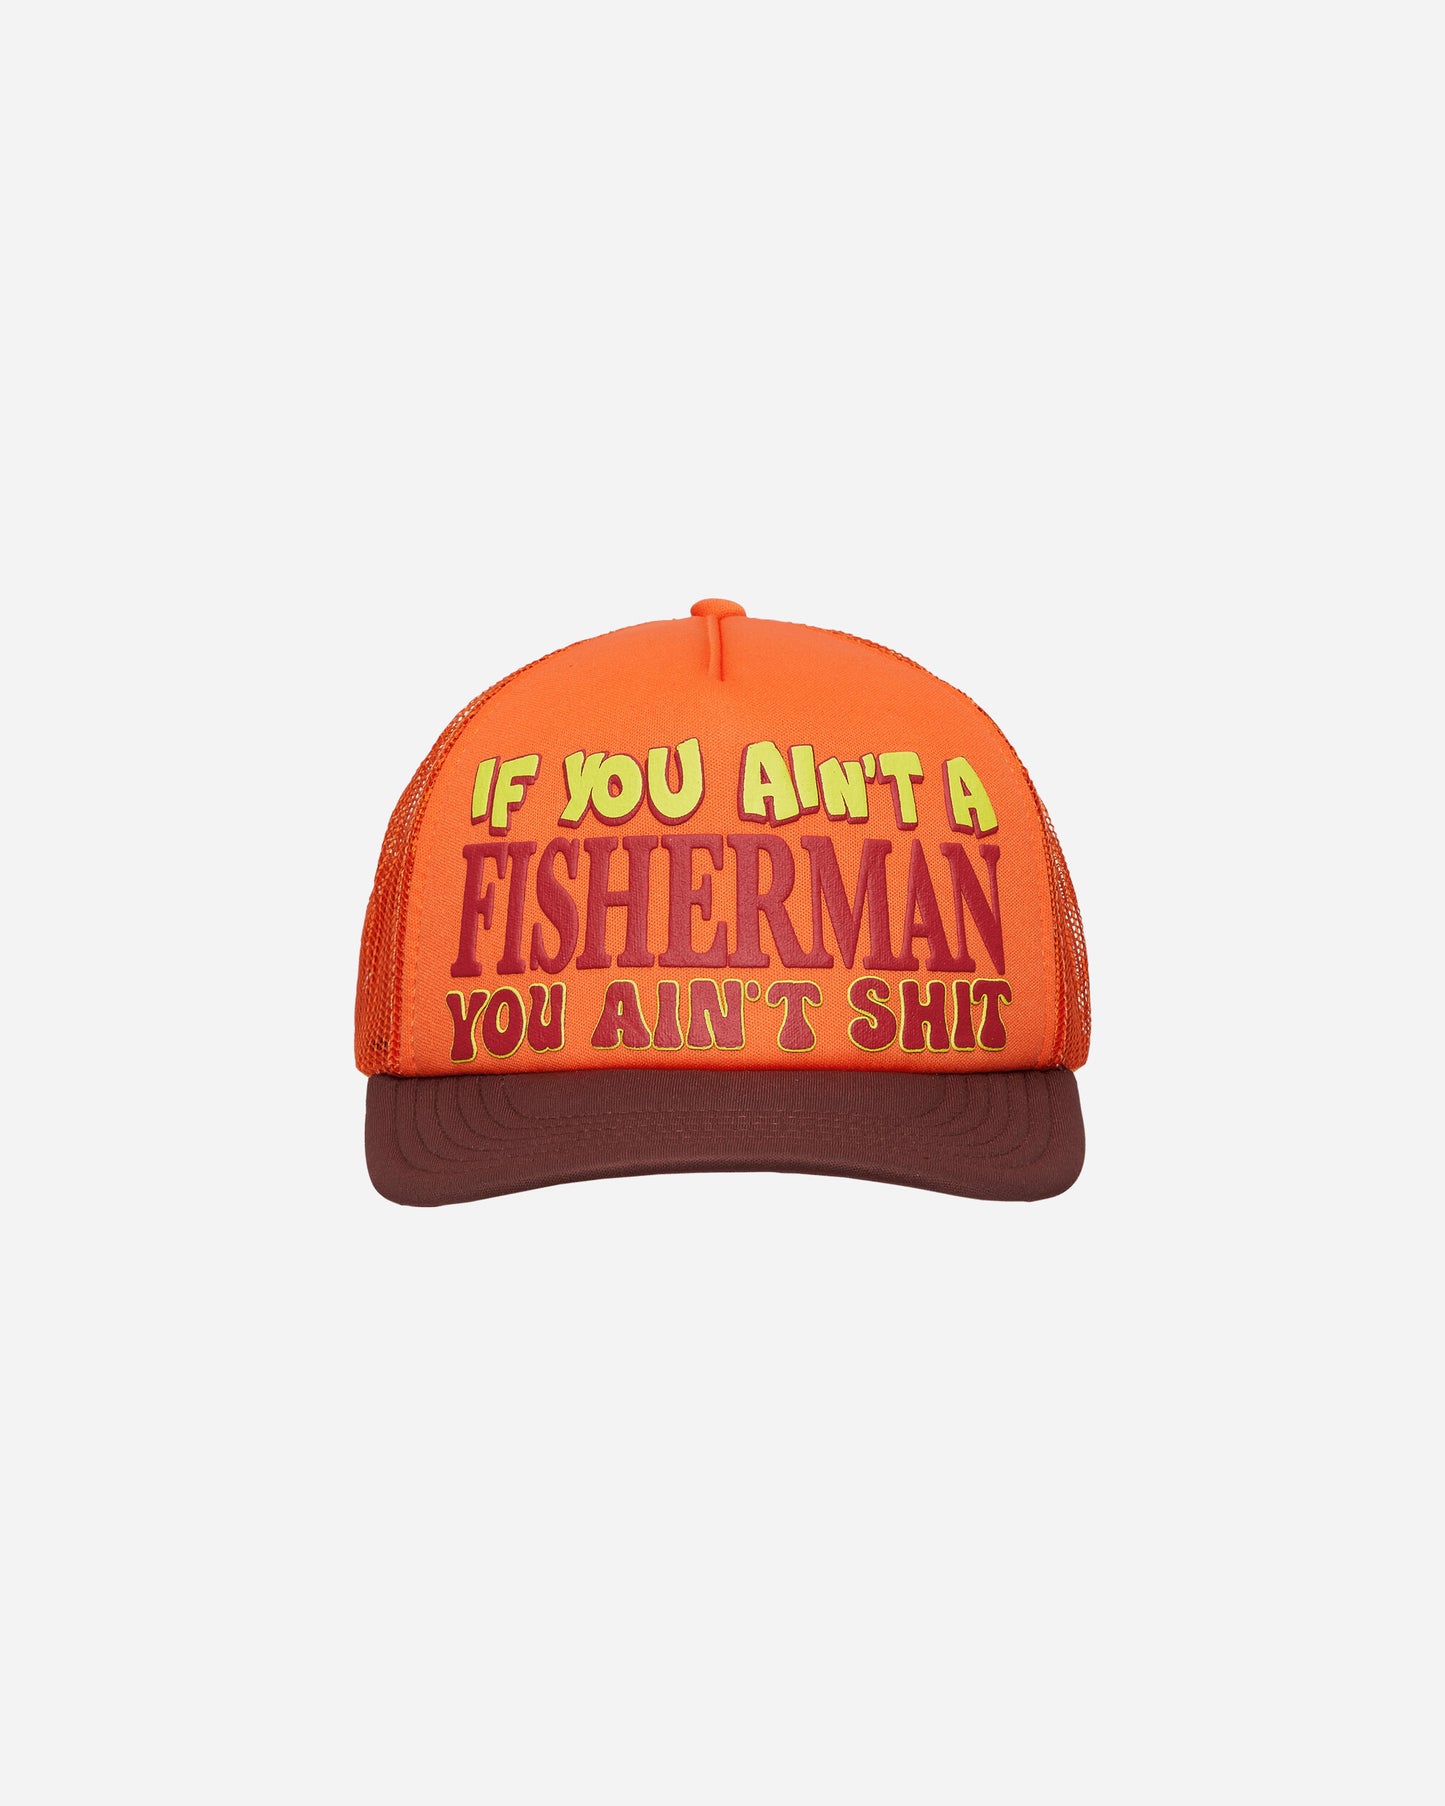 WESTERN HYDRODYNAMIC RESEARCH Fishing Hat Orange/Brown Hats Caps MWHR24SPSU4005 ORANGEBROWN